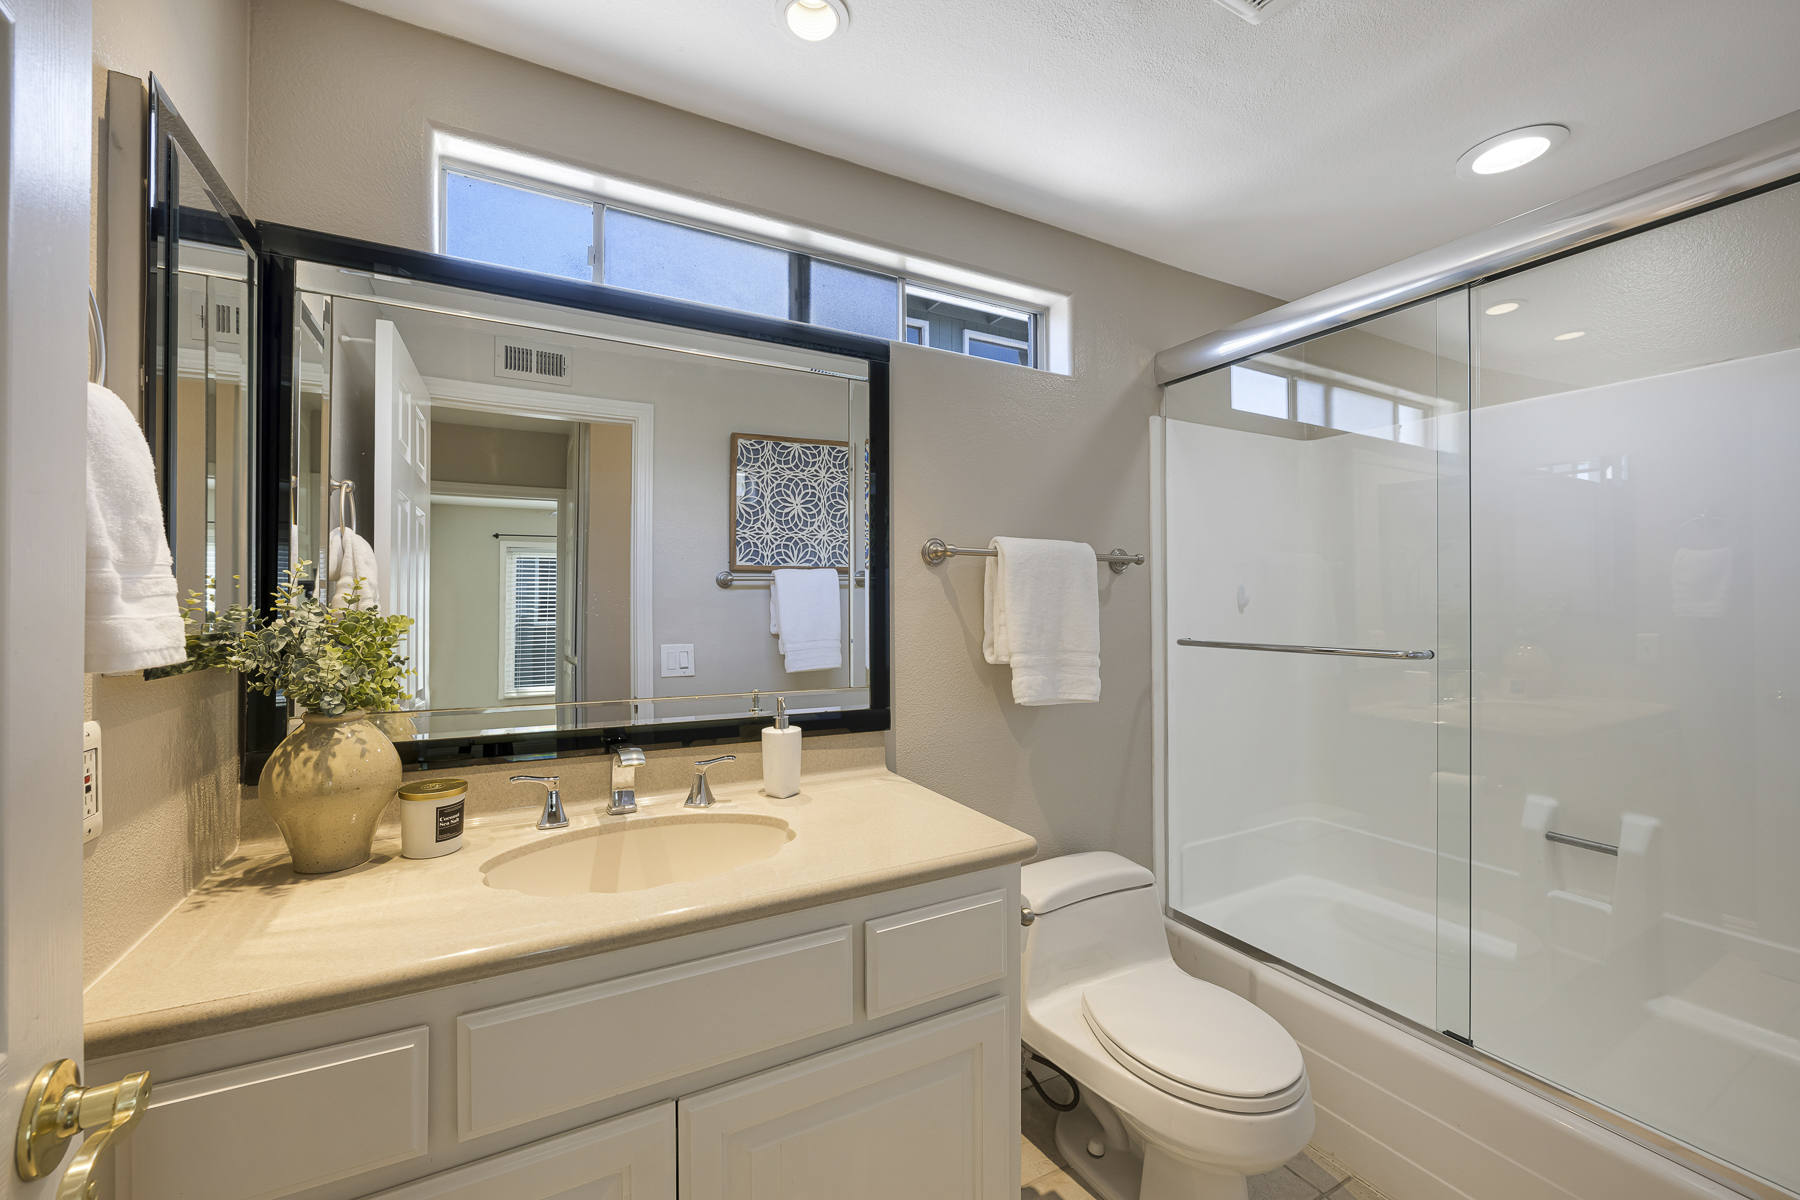 3424 Pinebrook Costa Mesa CA 92626: Bathroom with black framed mirror.